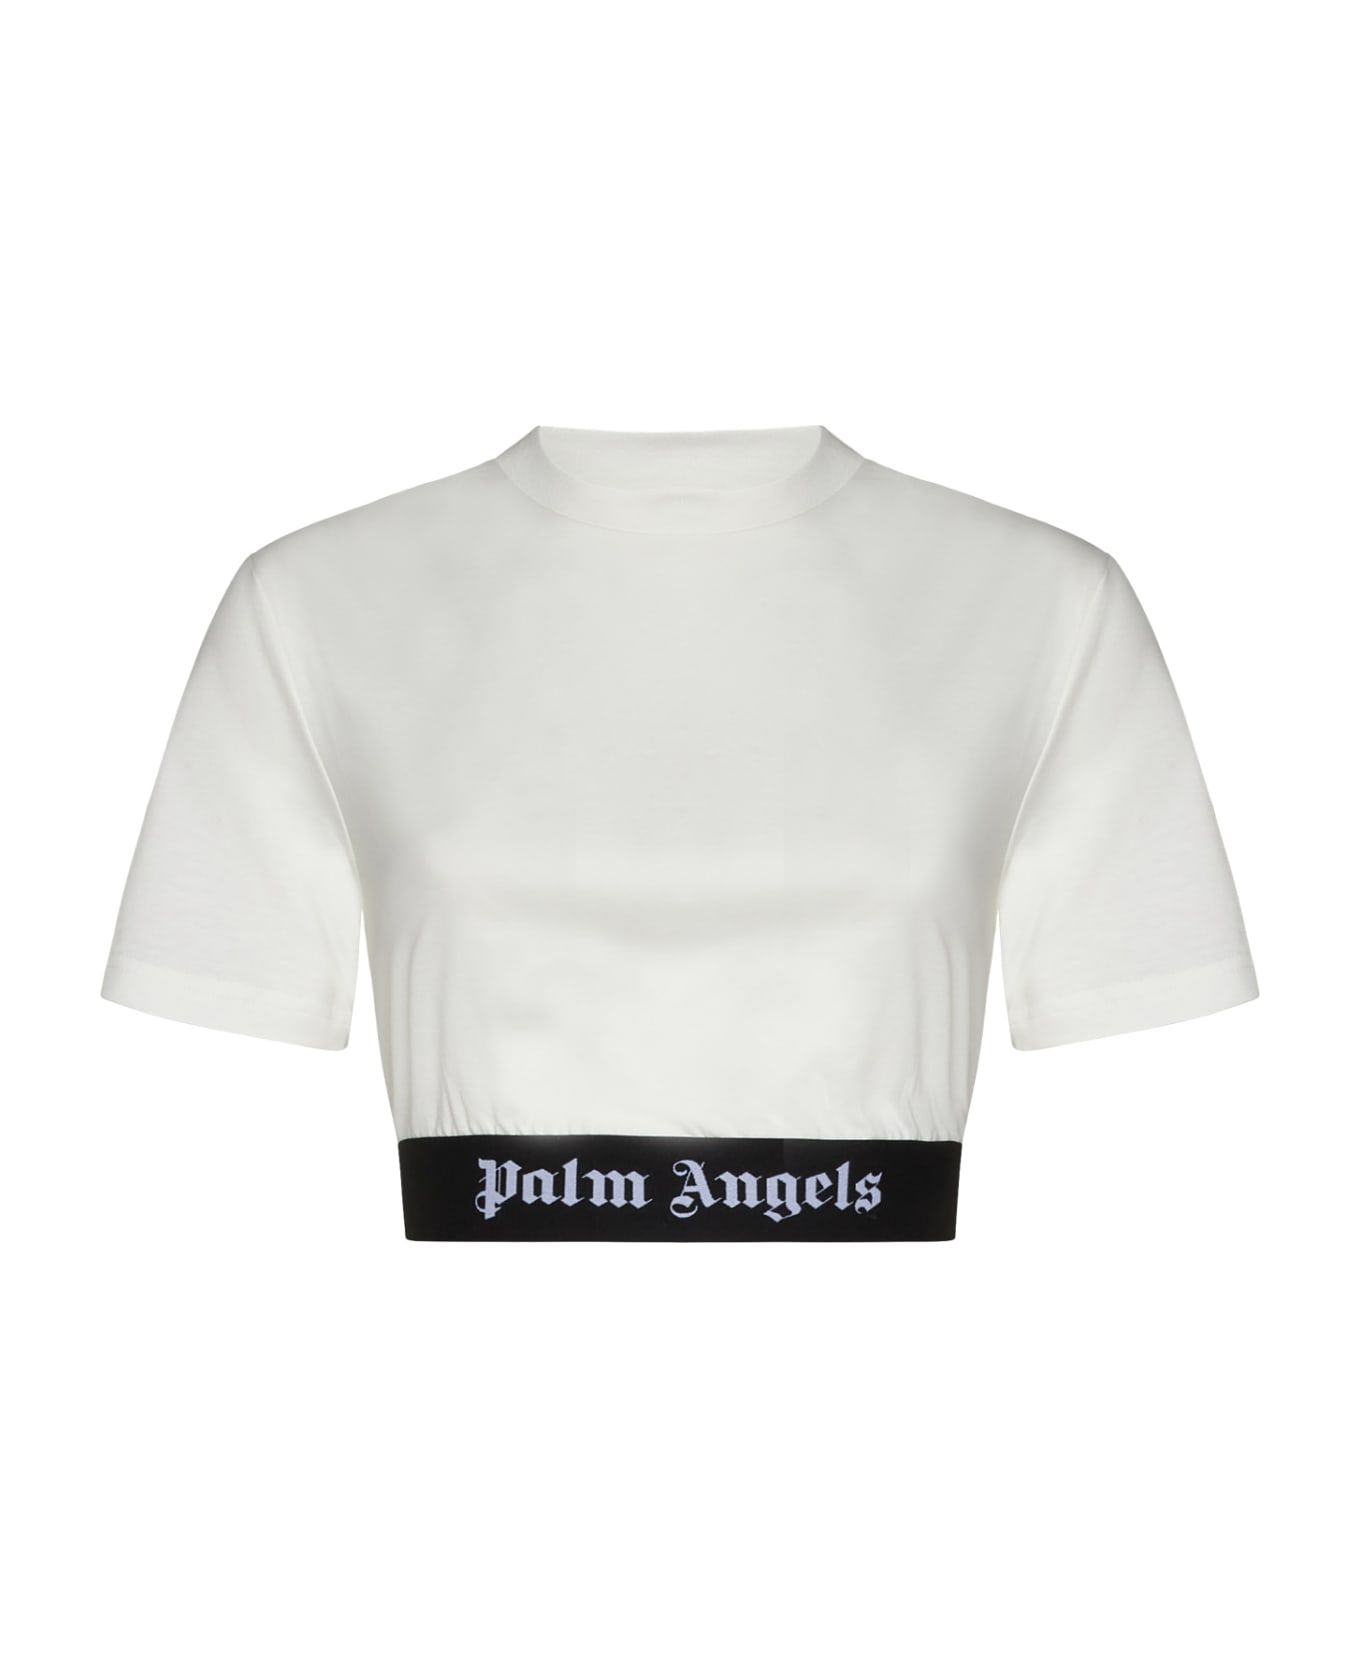 Palm Angels Cotton Crop Top - White